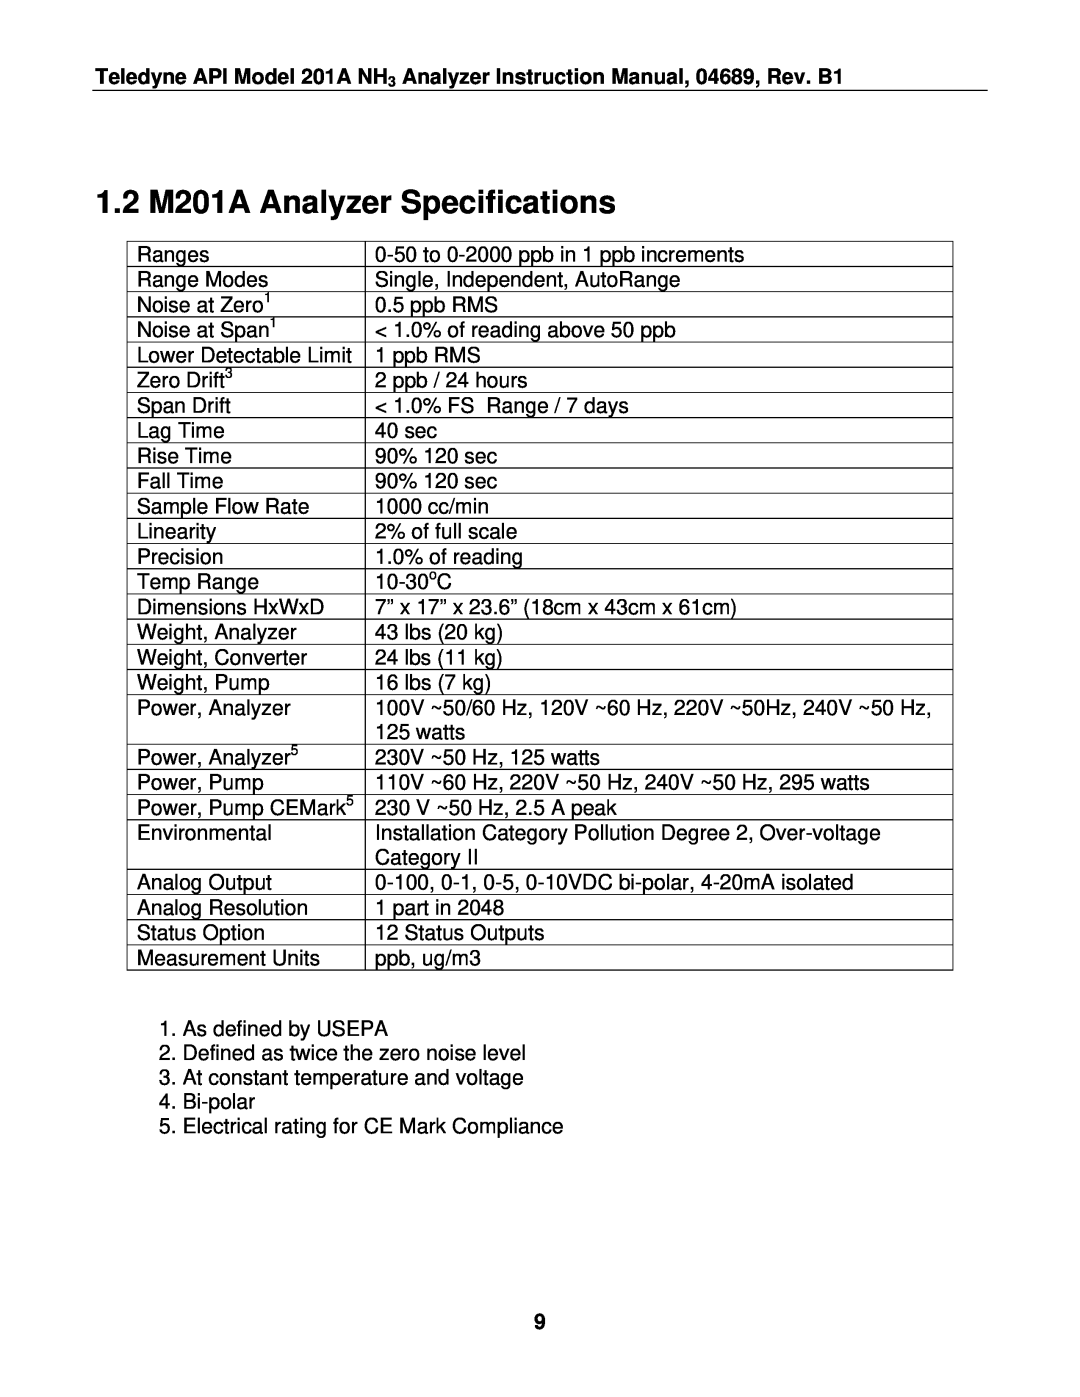 Teledyne manual 1.2 M201A Analyzer Specifications 